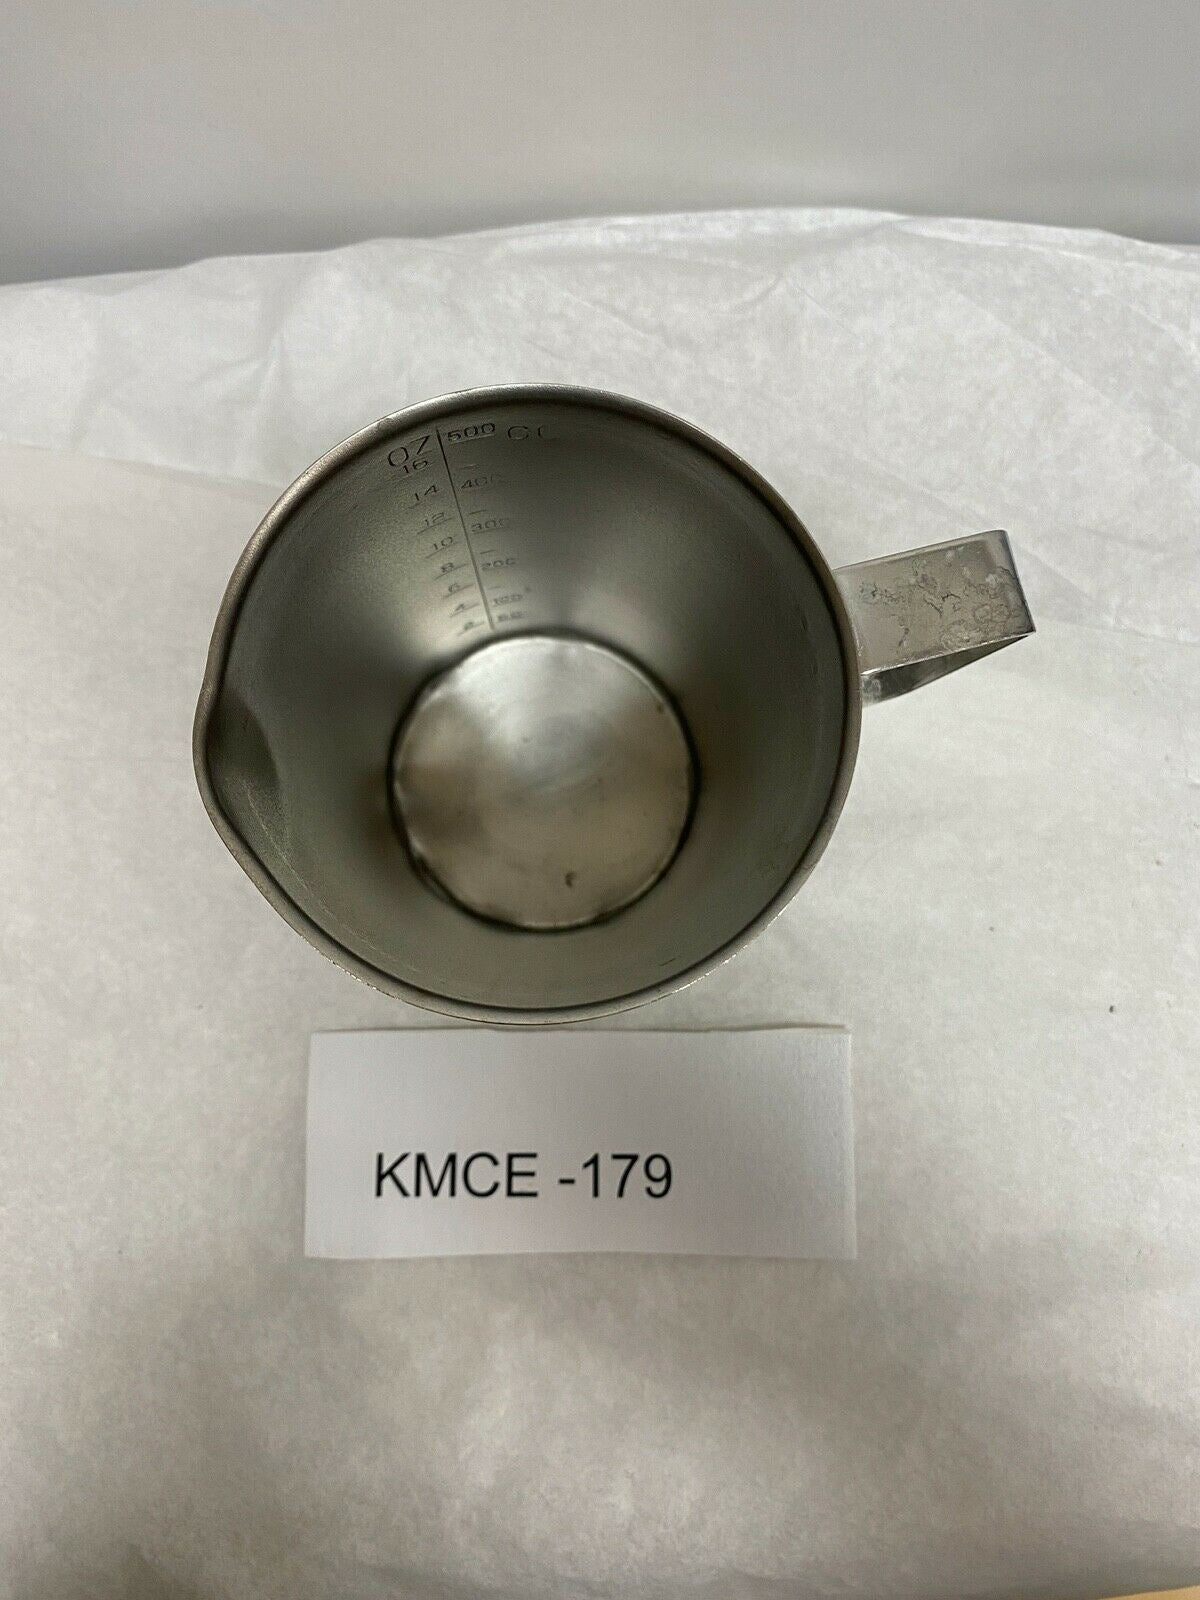 16 Oz. Medical Measuring Cup 4" x 2" | KMCE-179 DIAGNOSTIC ULTRASOUND MACHINES FOR SALE